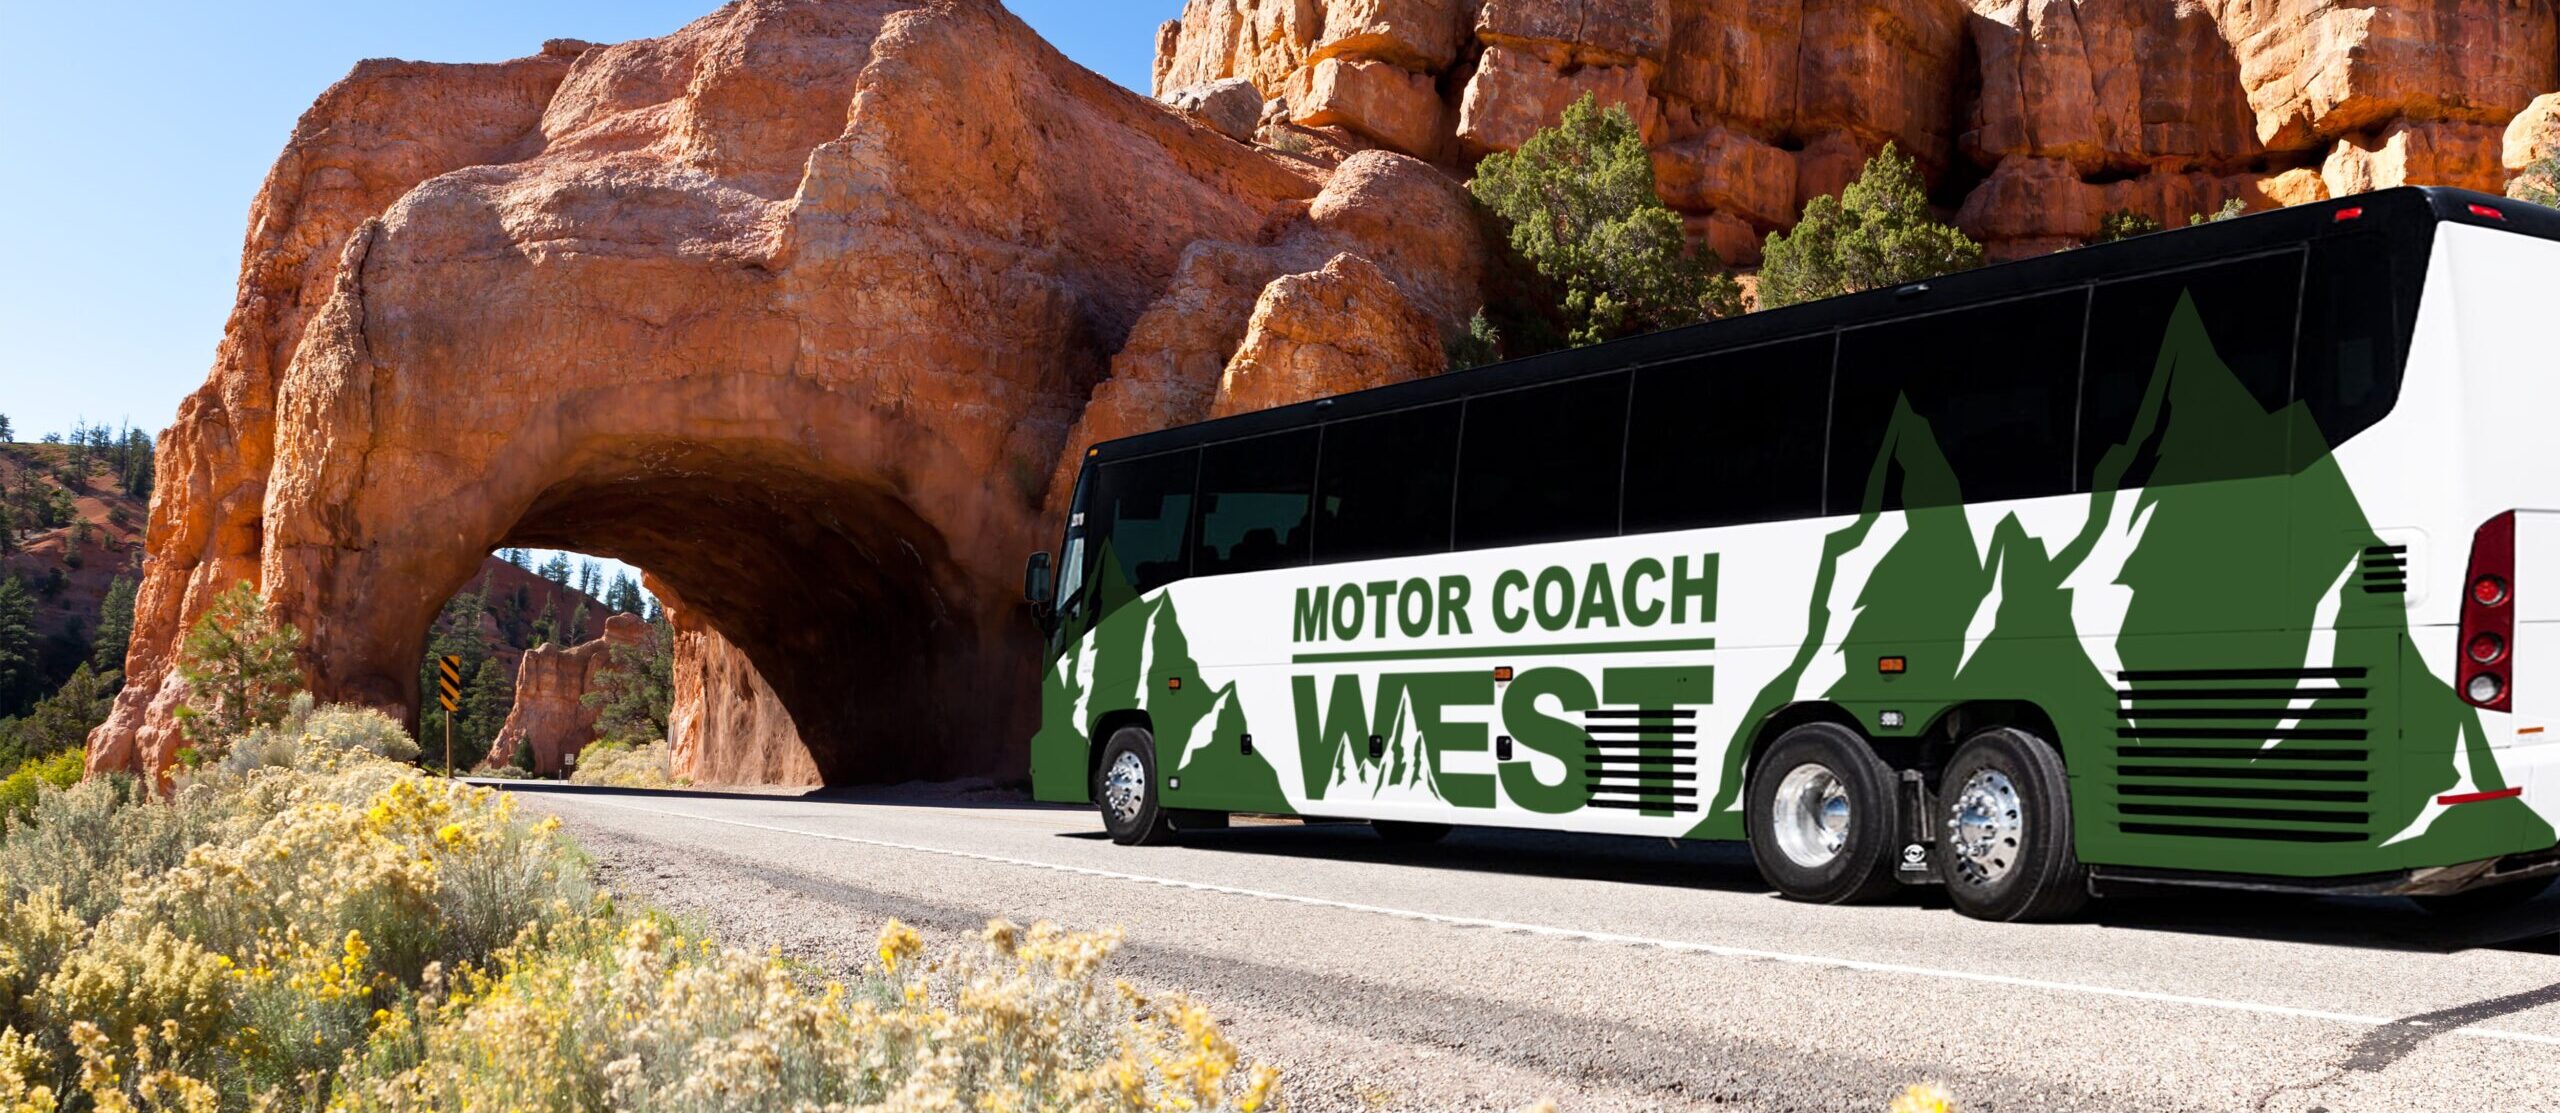 Green Motor Coach West bus entering a rock tunnel.